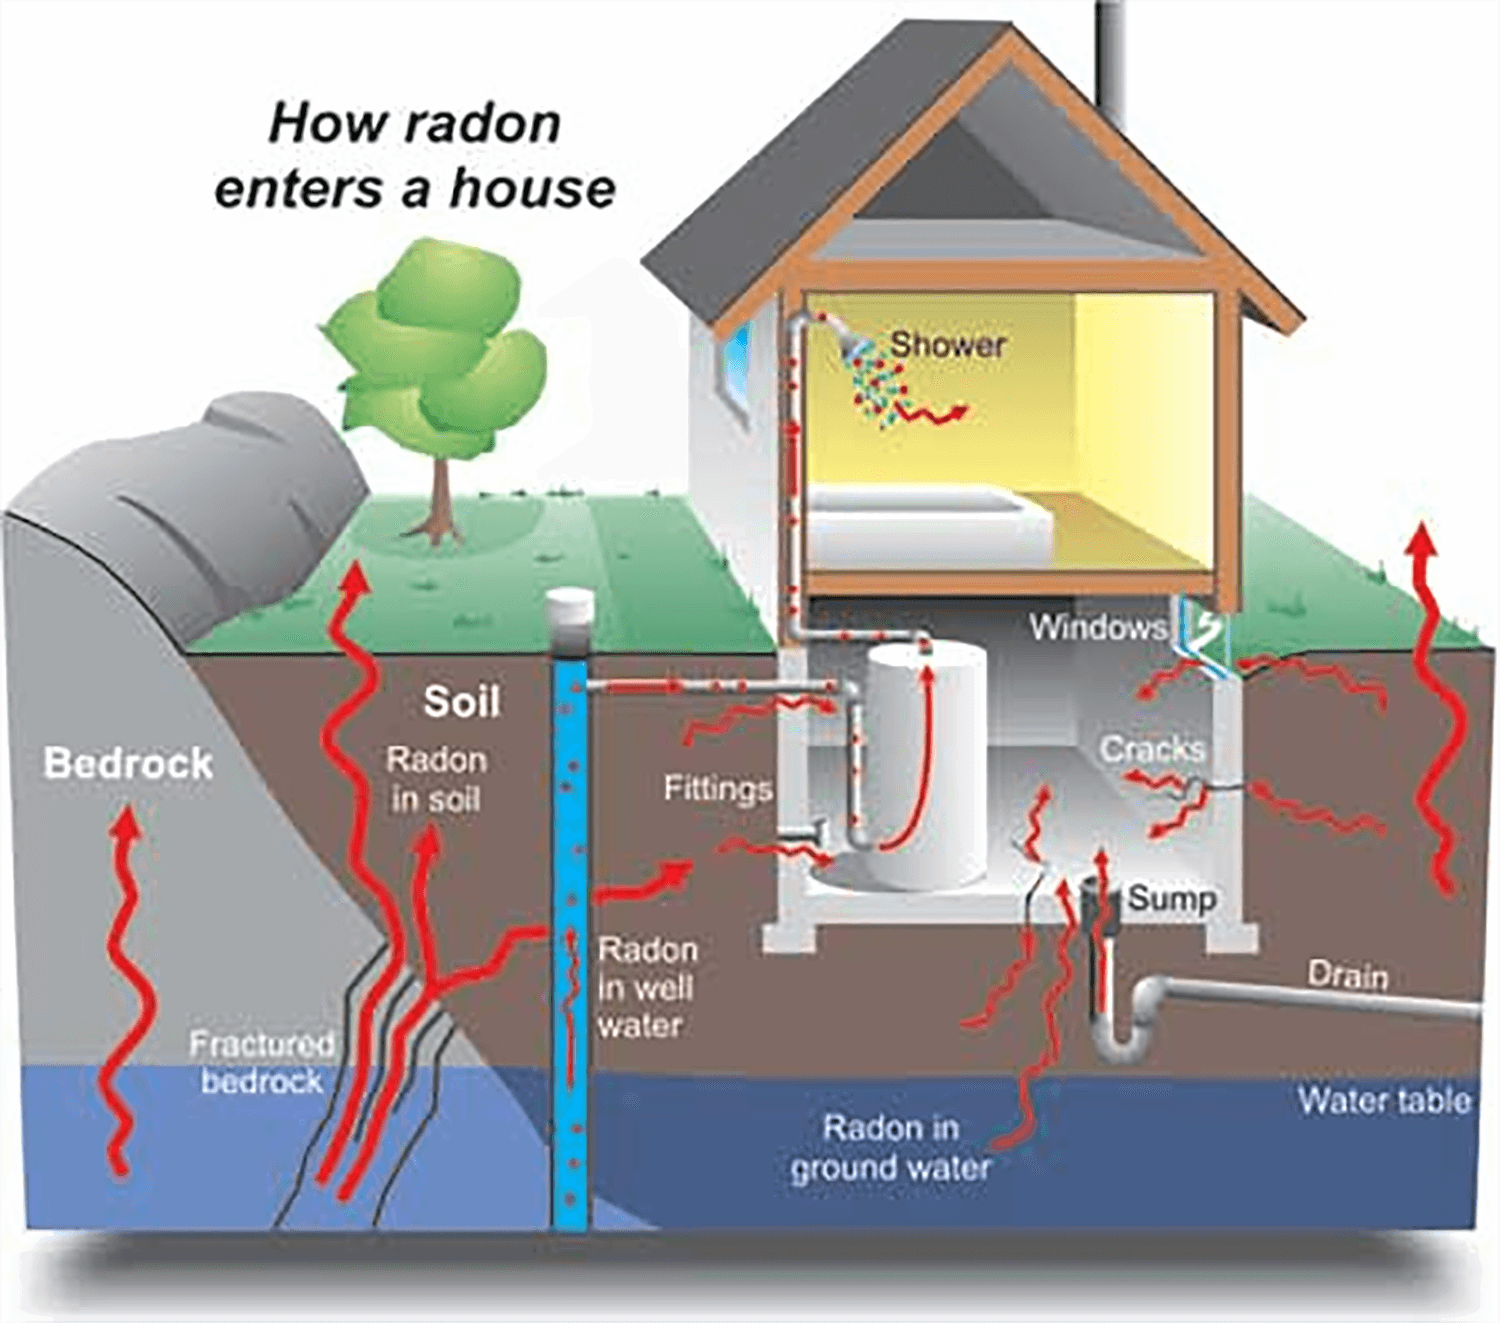 How radon enters a house